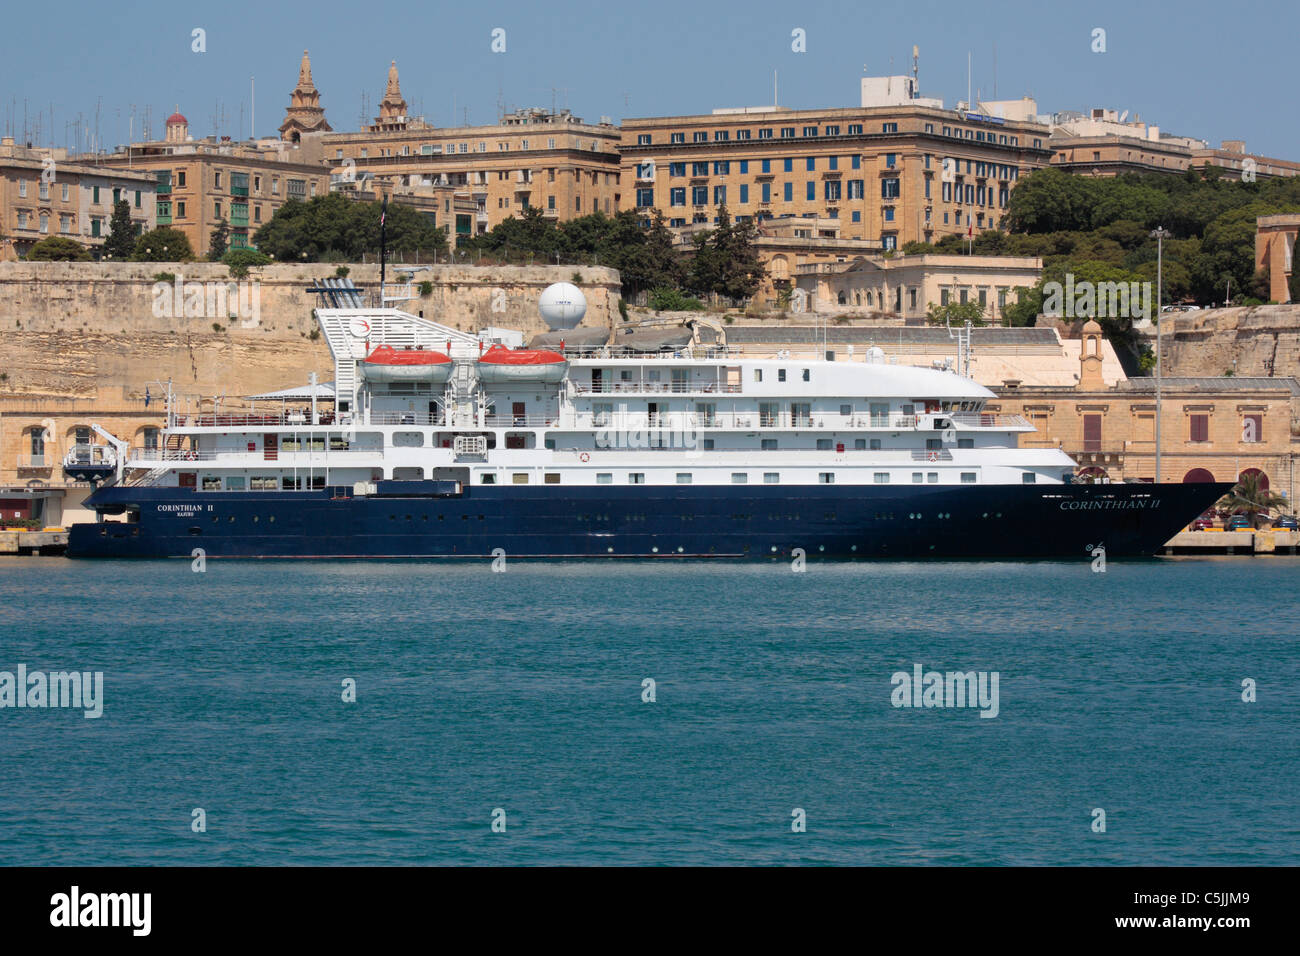 The cruise ship Corinthian II in Malta's Grand Harbour Stock Photo